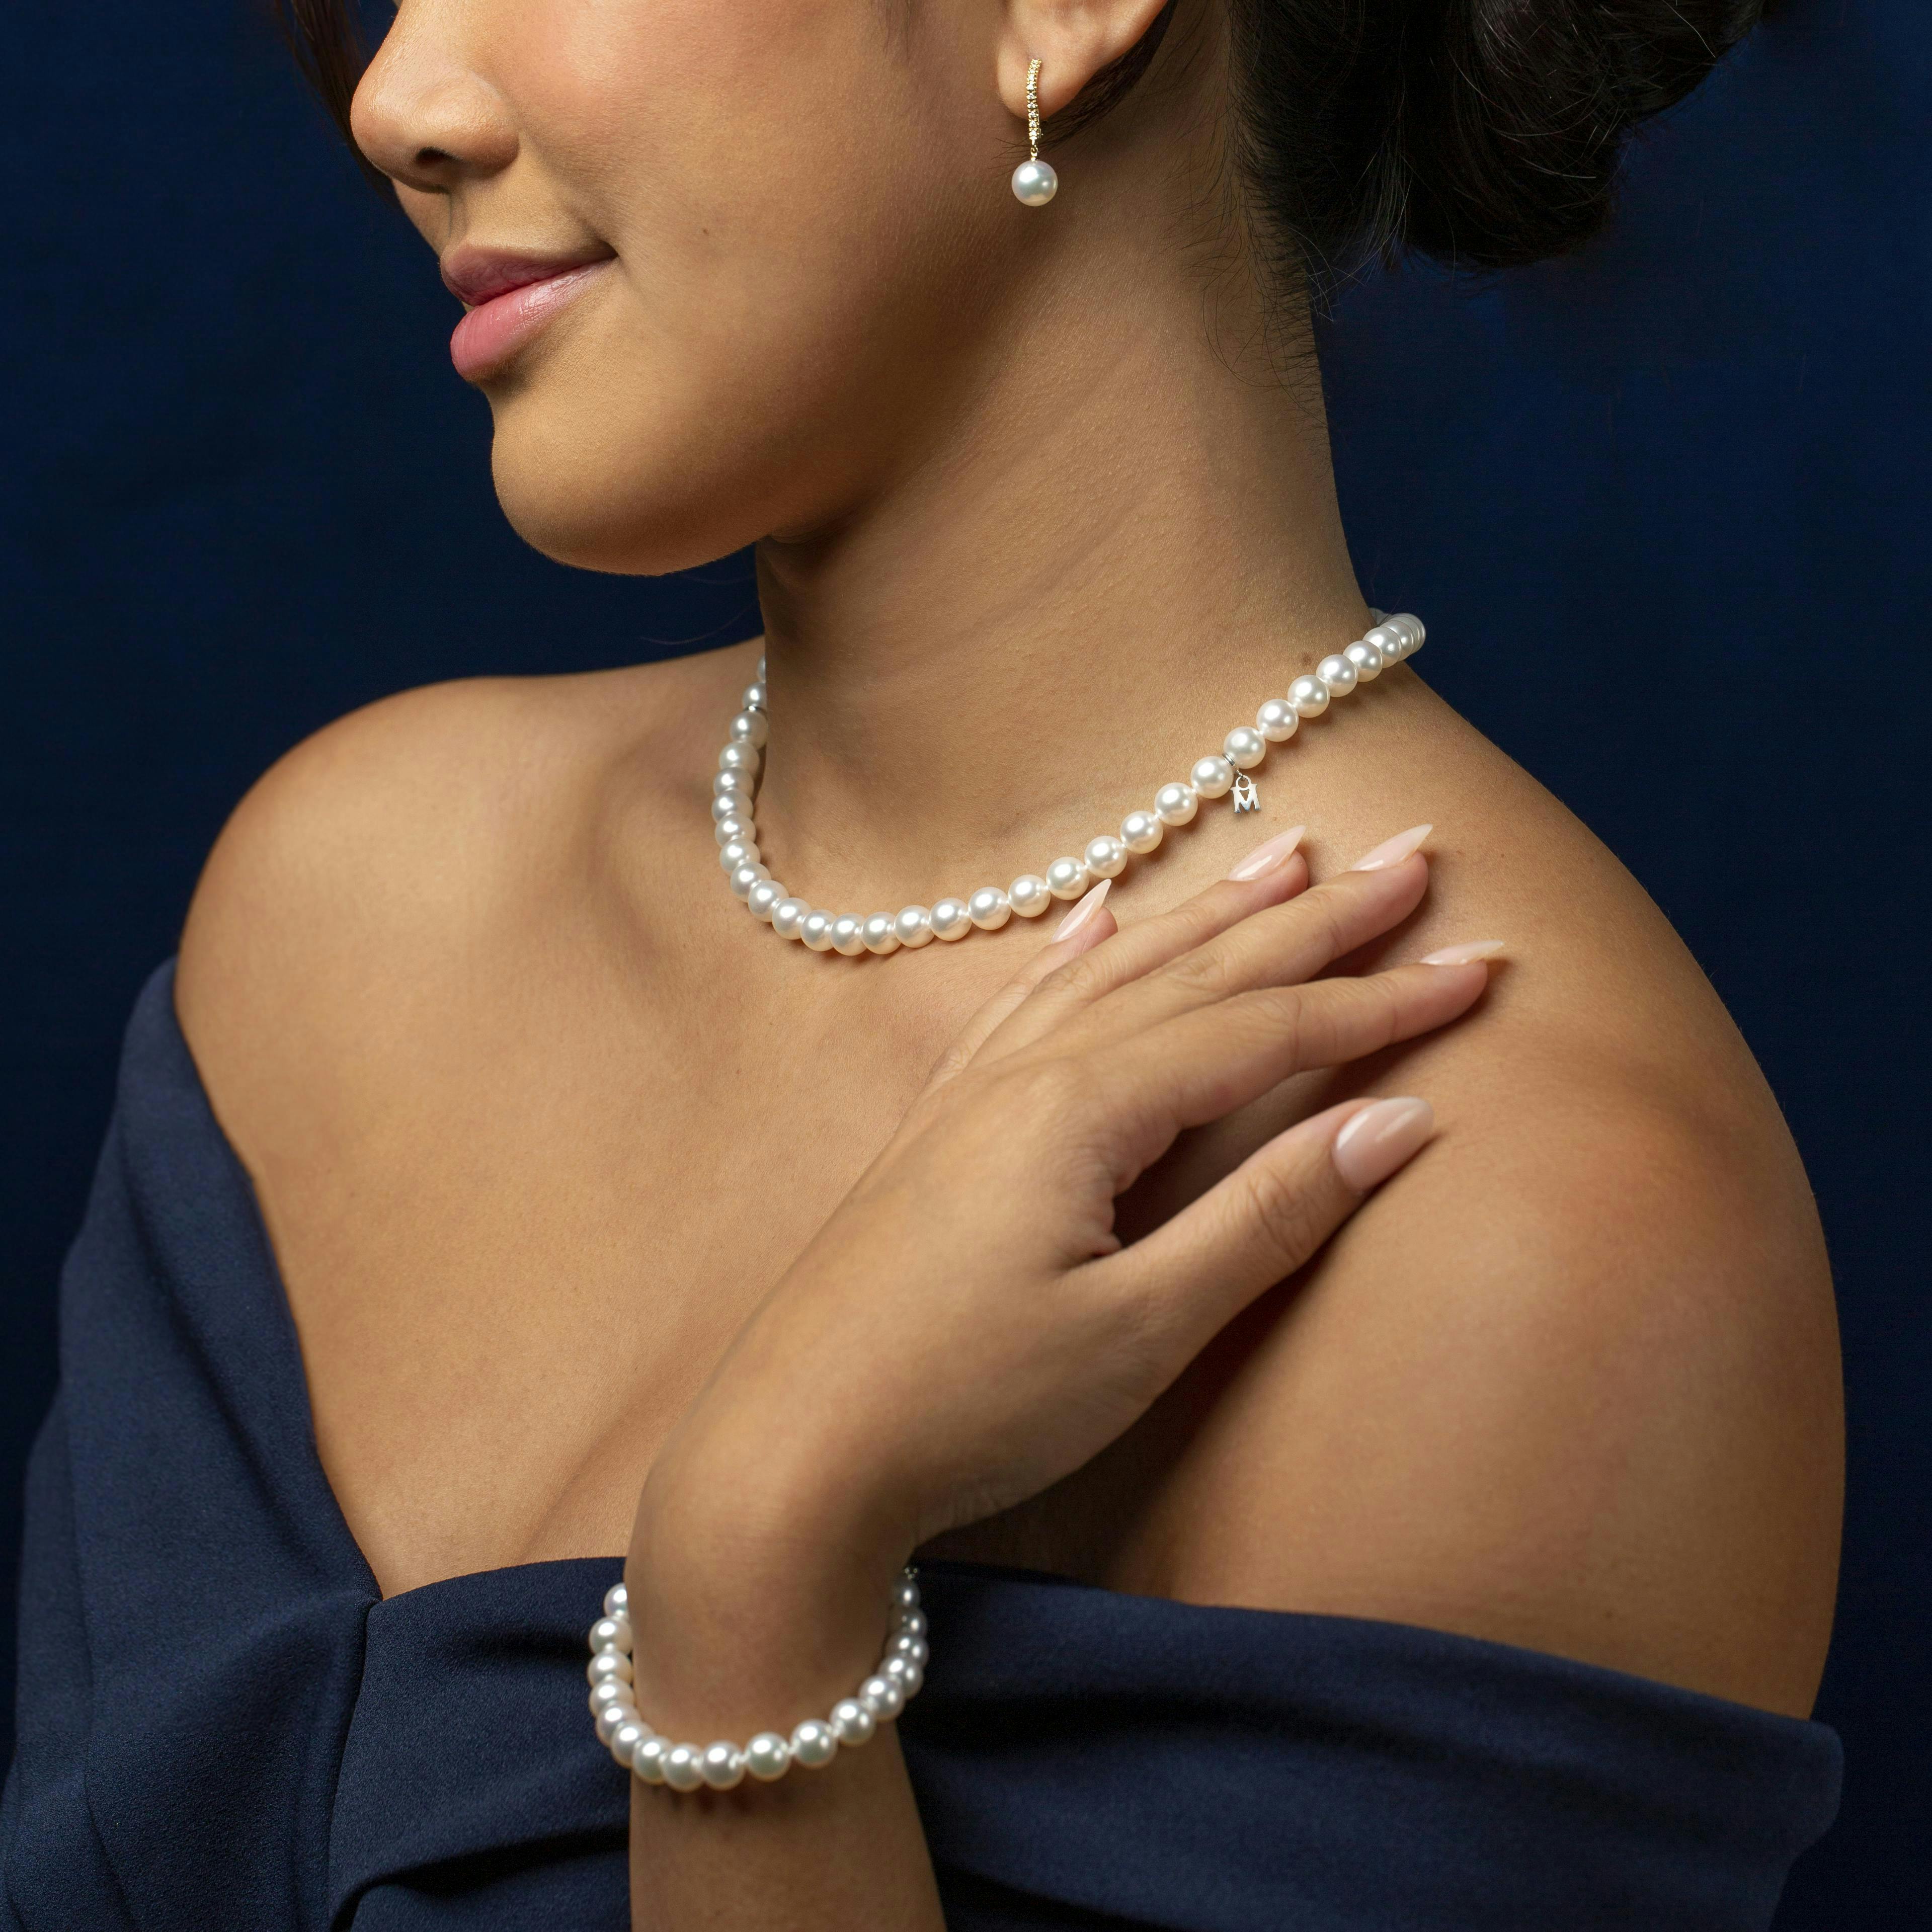 mikimoto pearl necklace and bracelet set